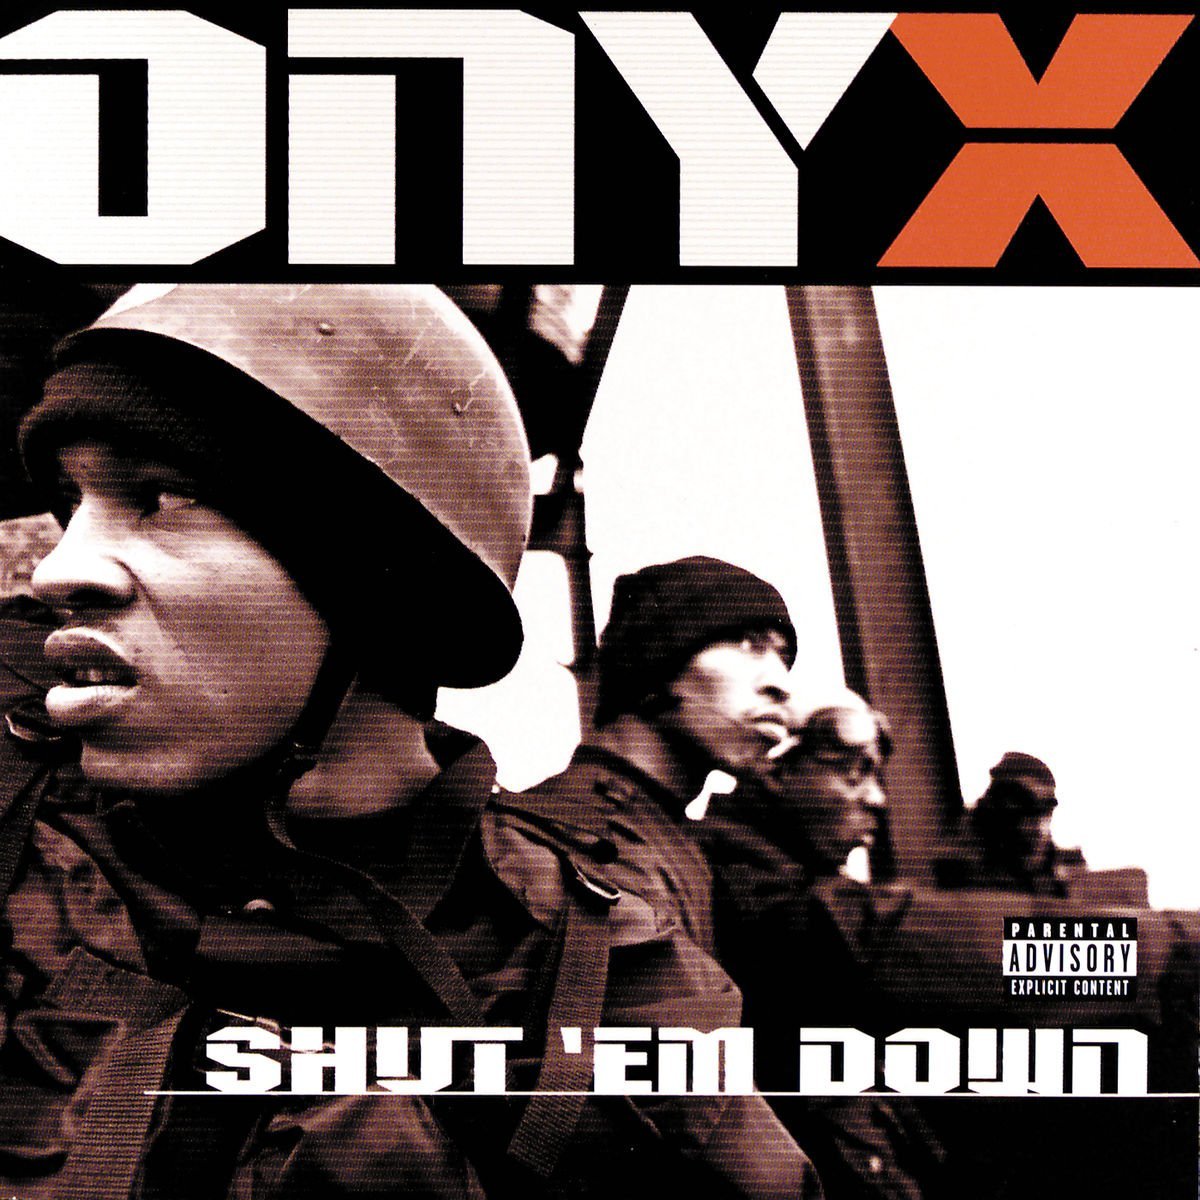 Onyx – Shut’em down